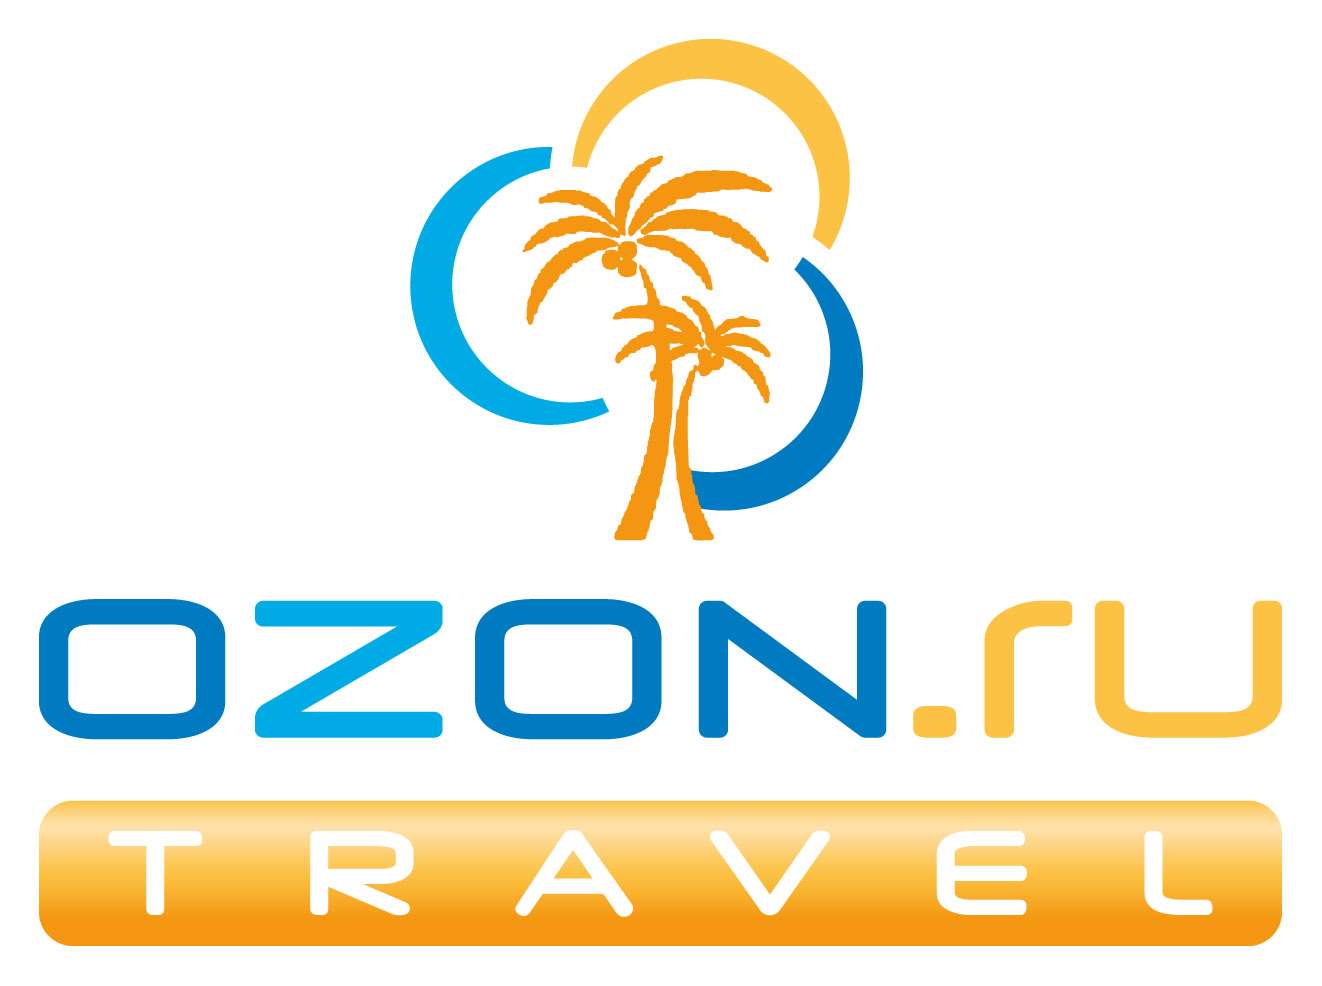 ozon.ru travel